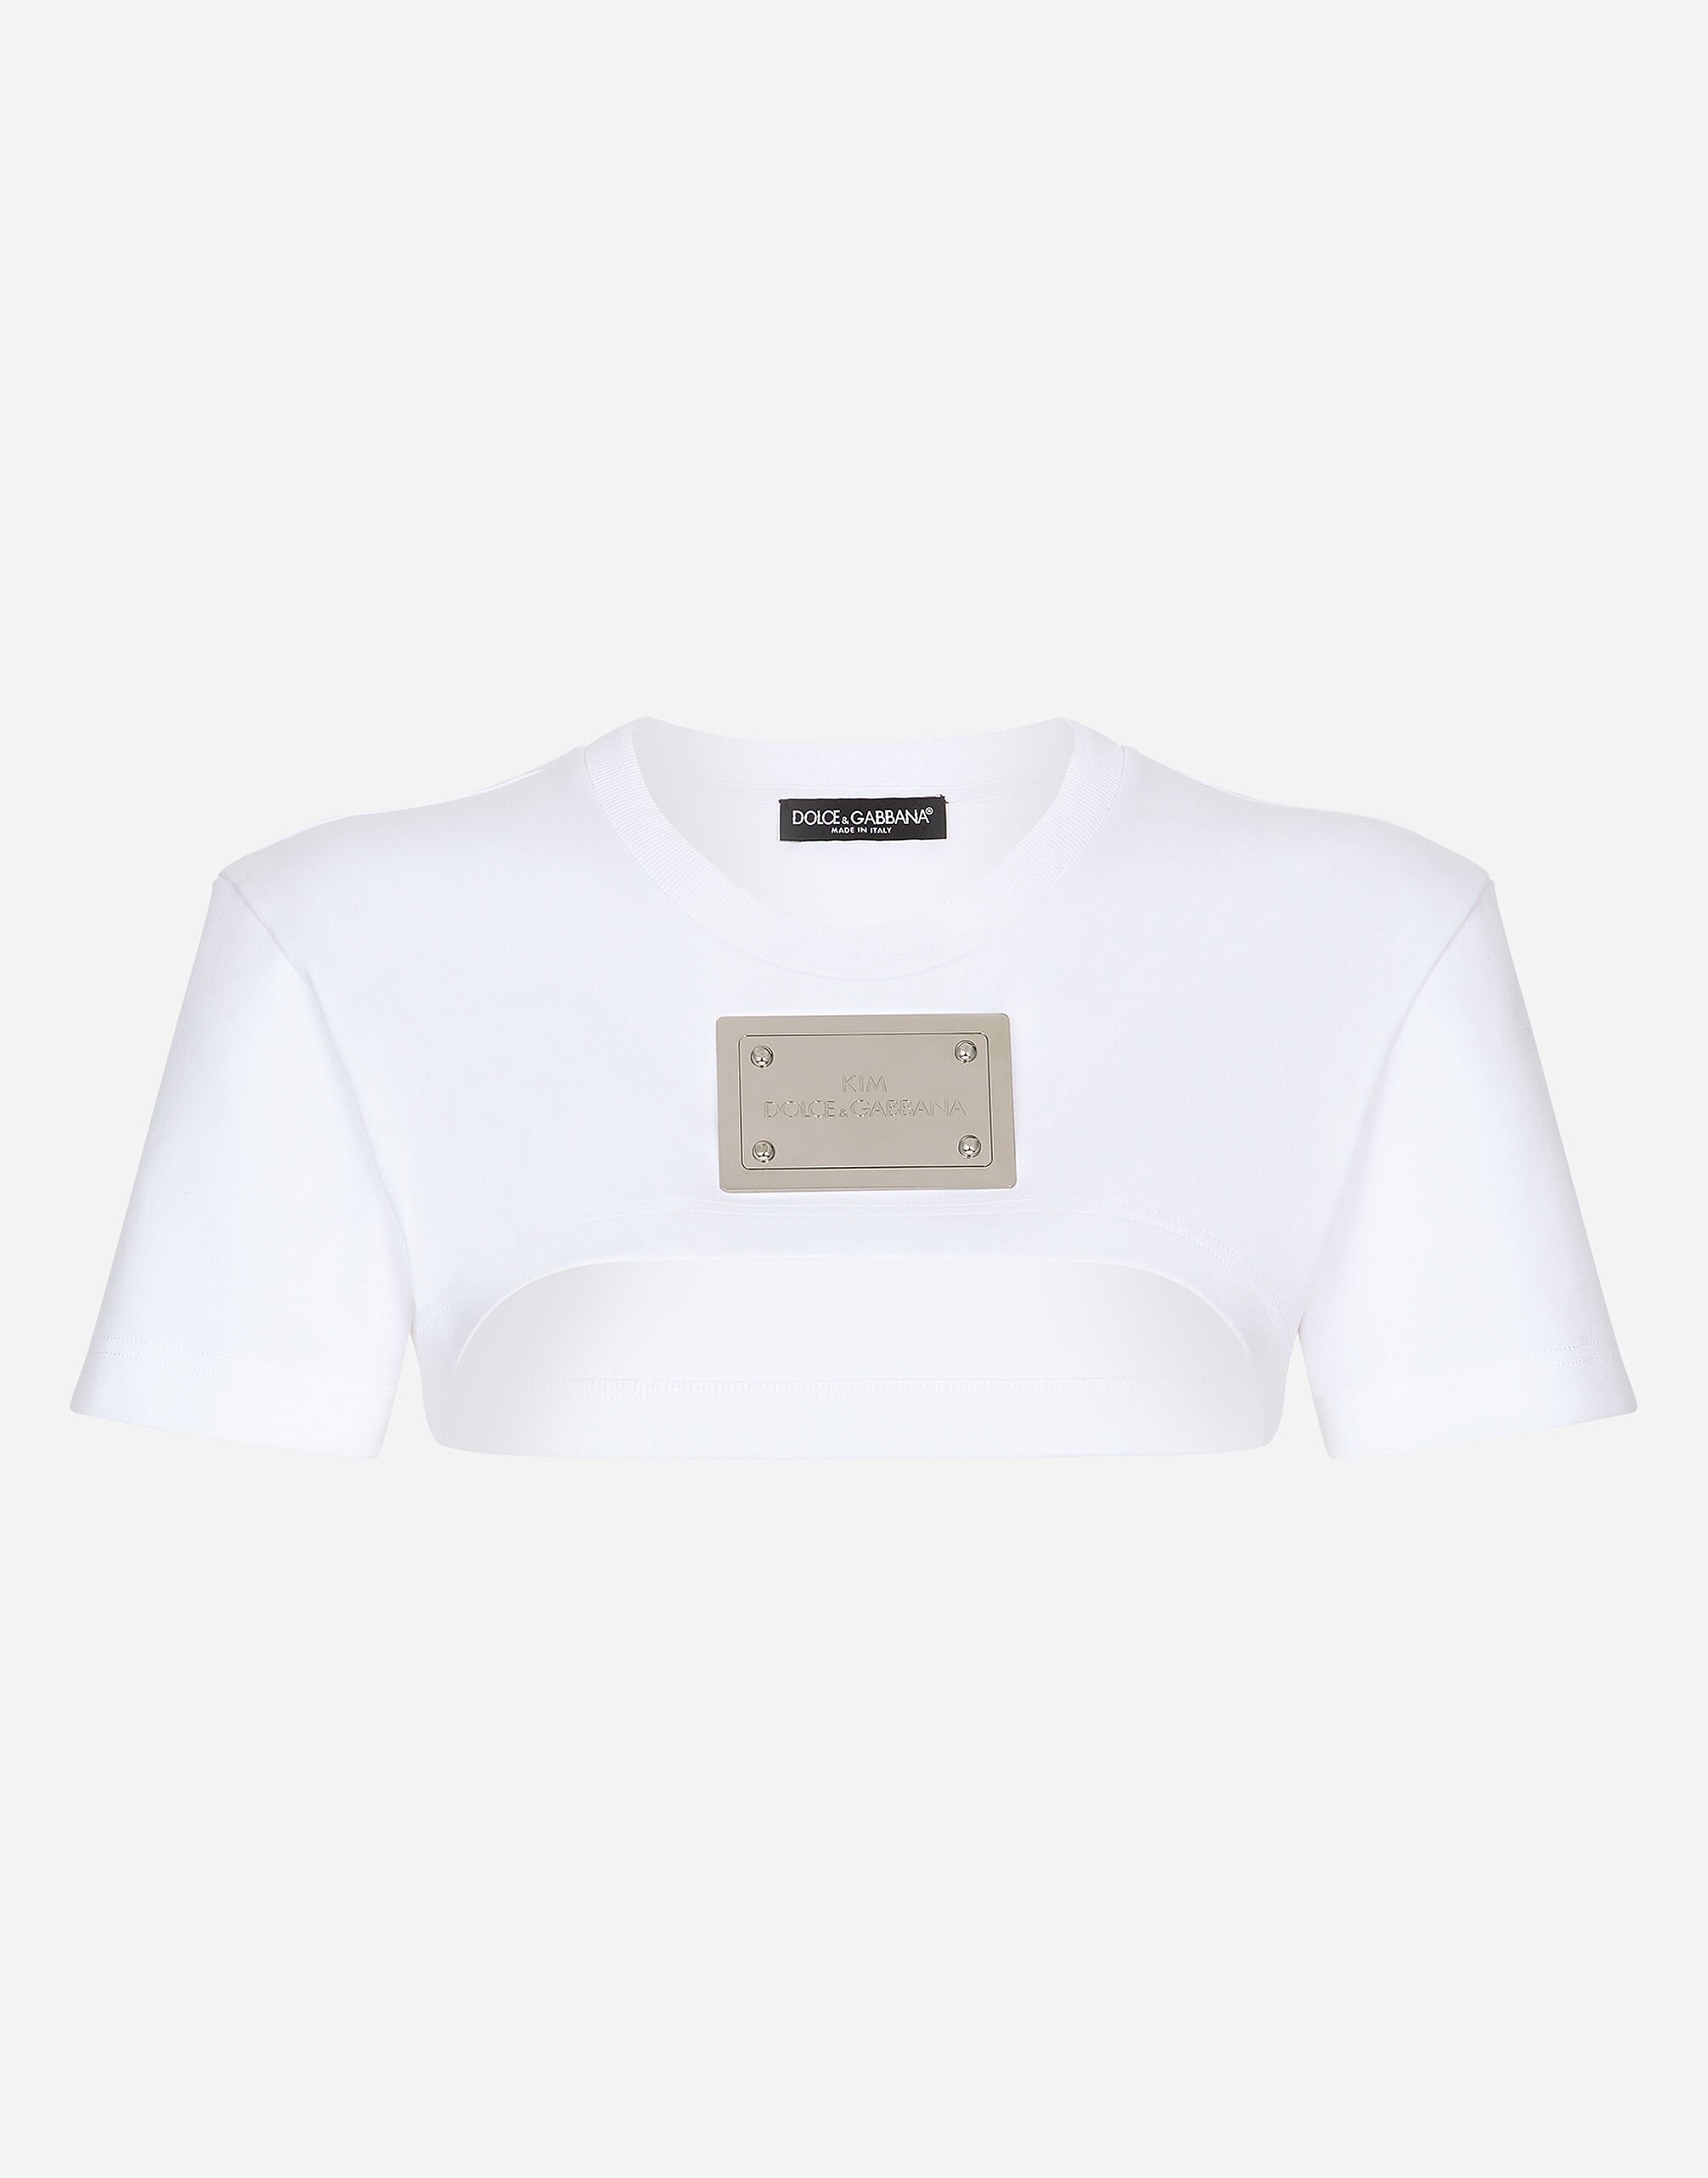 Dolce & Gabbana KIM DOLCE&GABBANA Cropped jersey T-shirt with “KIM Dolce&Gabbana” tag Black WNP4C8W1111